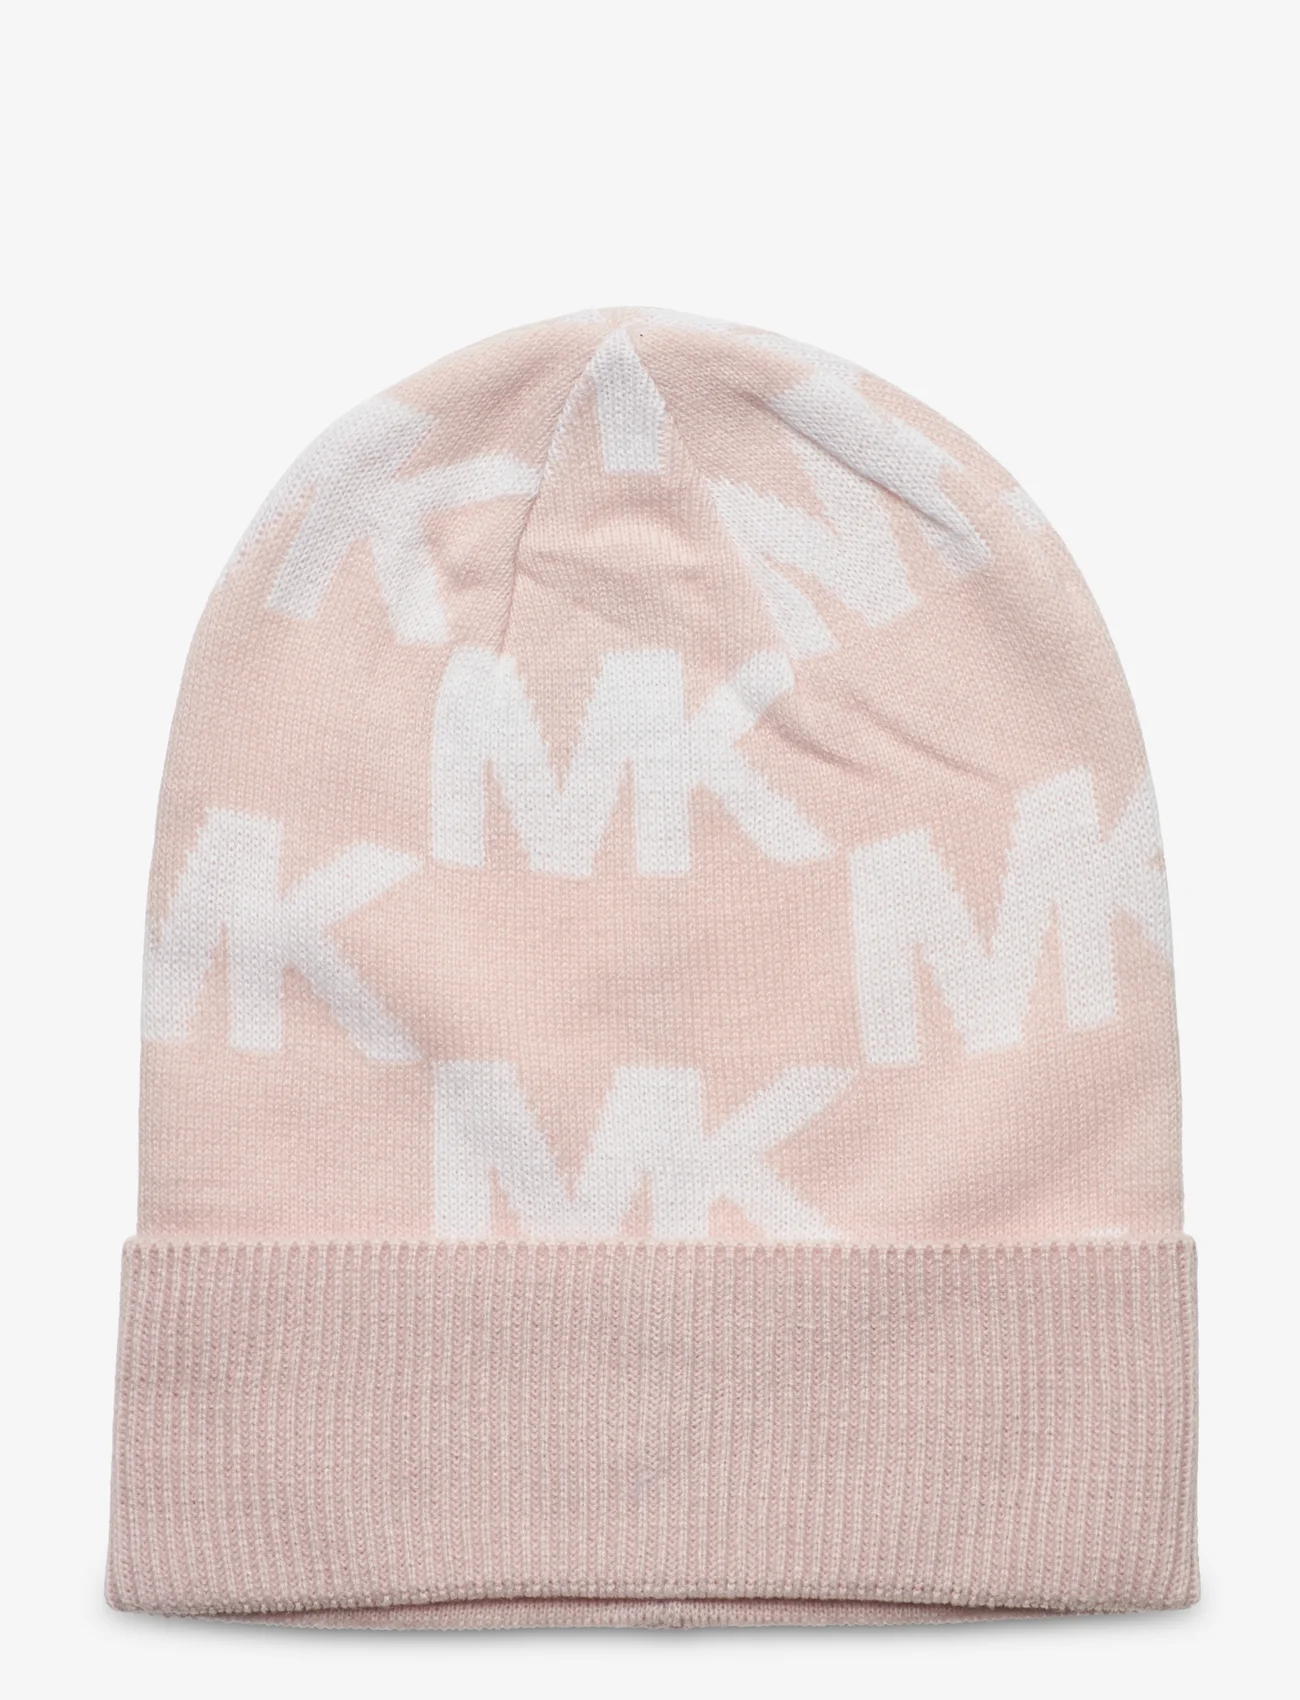 Michael Kors Accessories - Oversized chess mk cuff hat - pigimütsid - soft pink, cream - 0